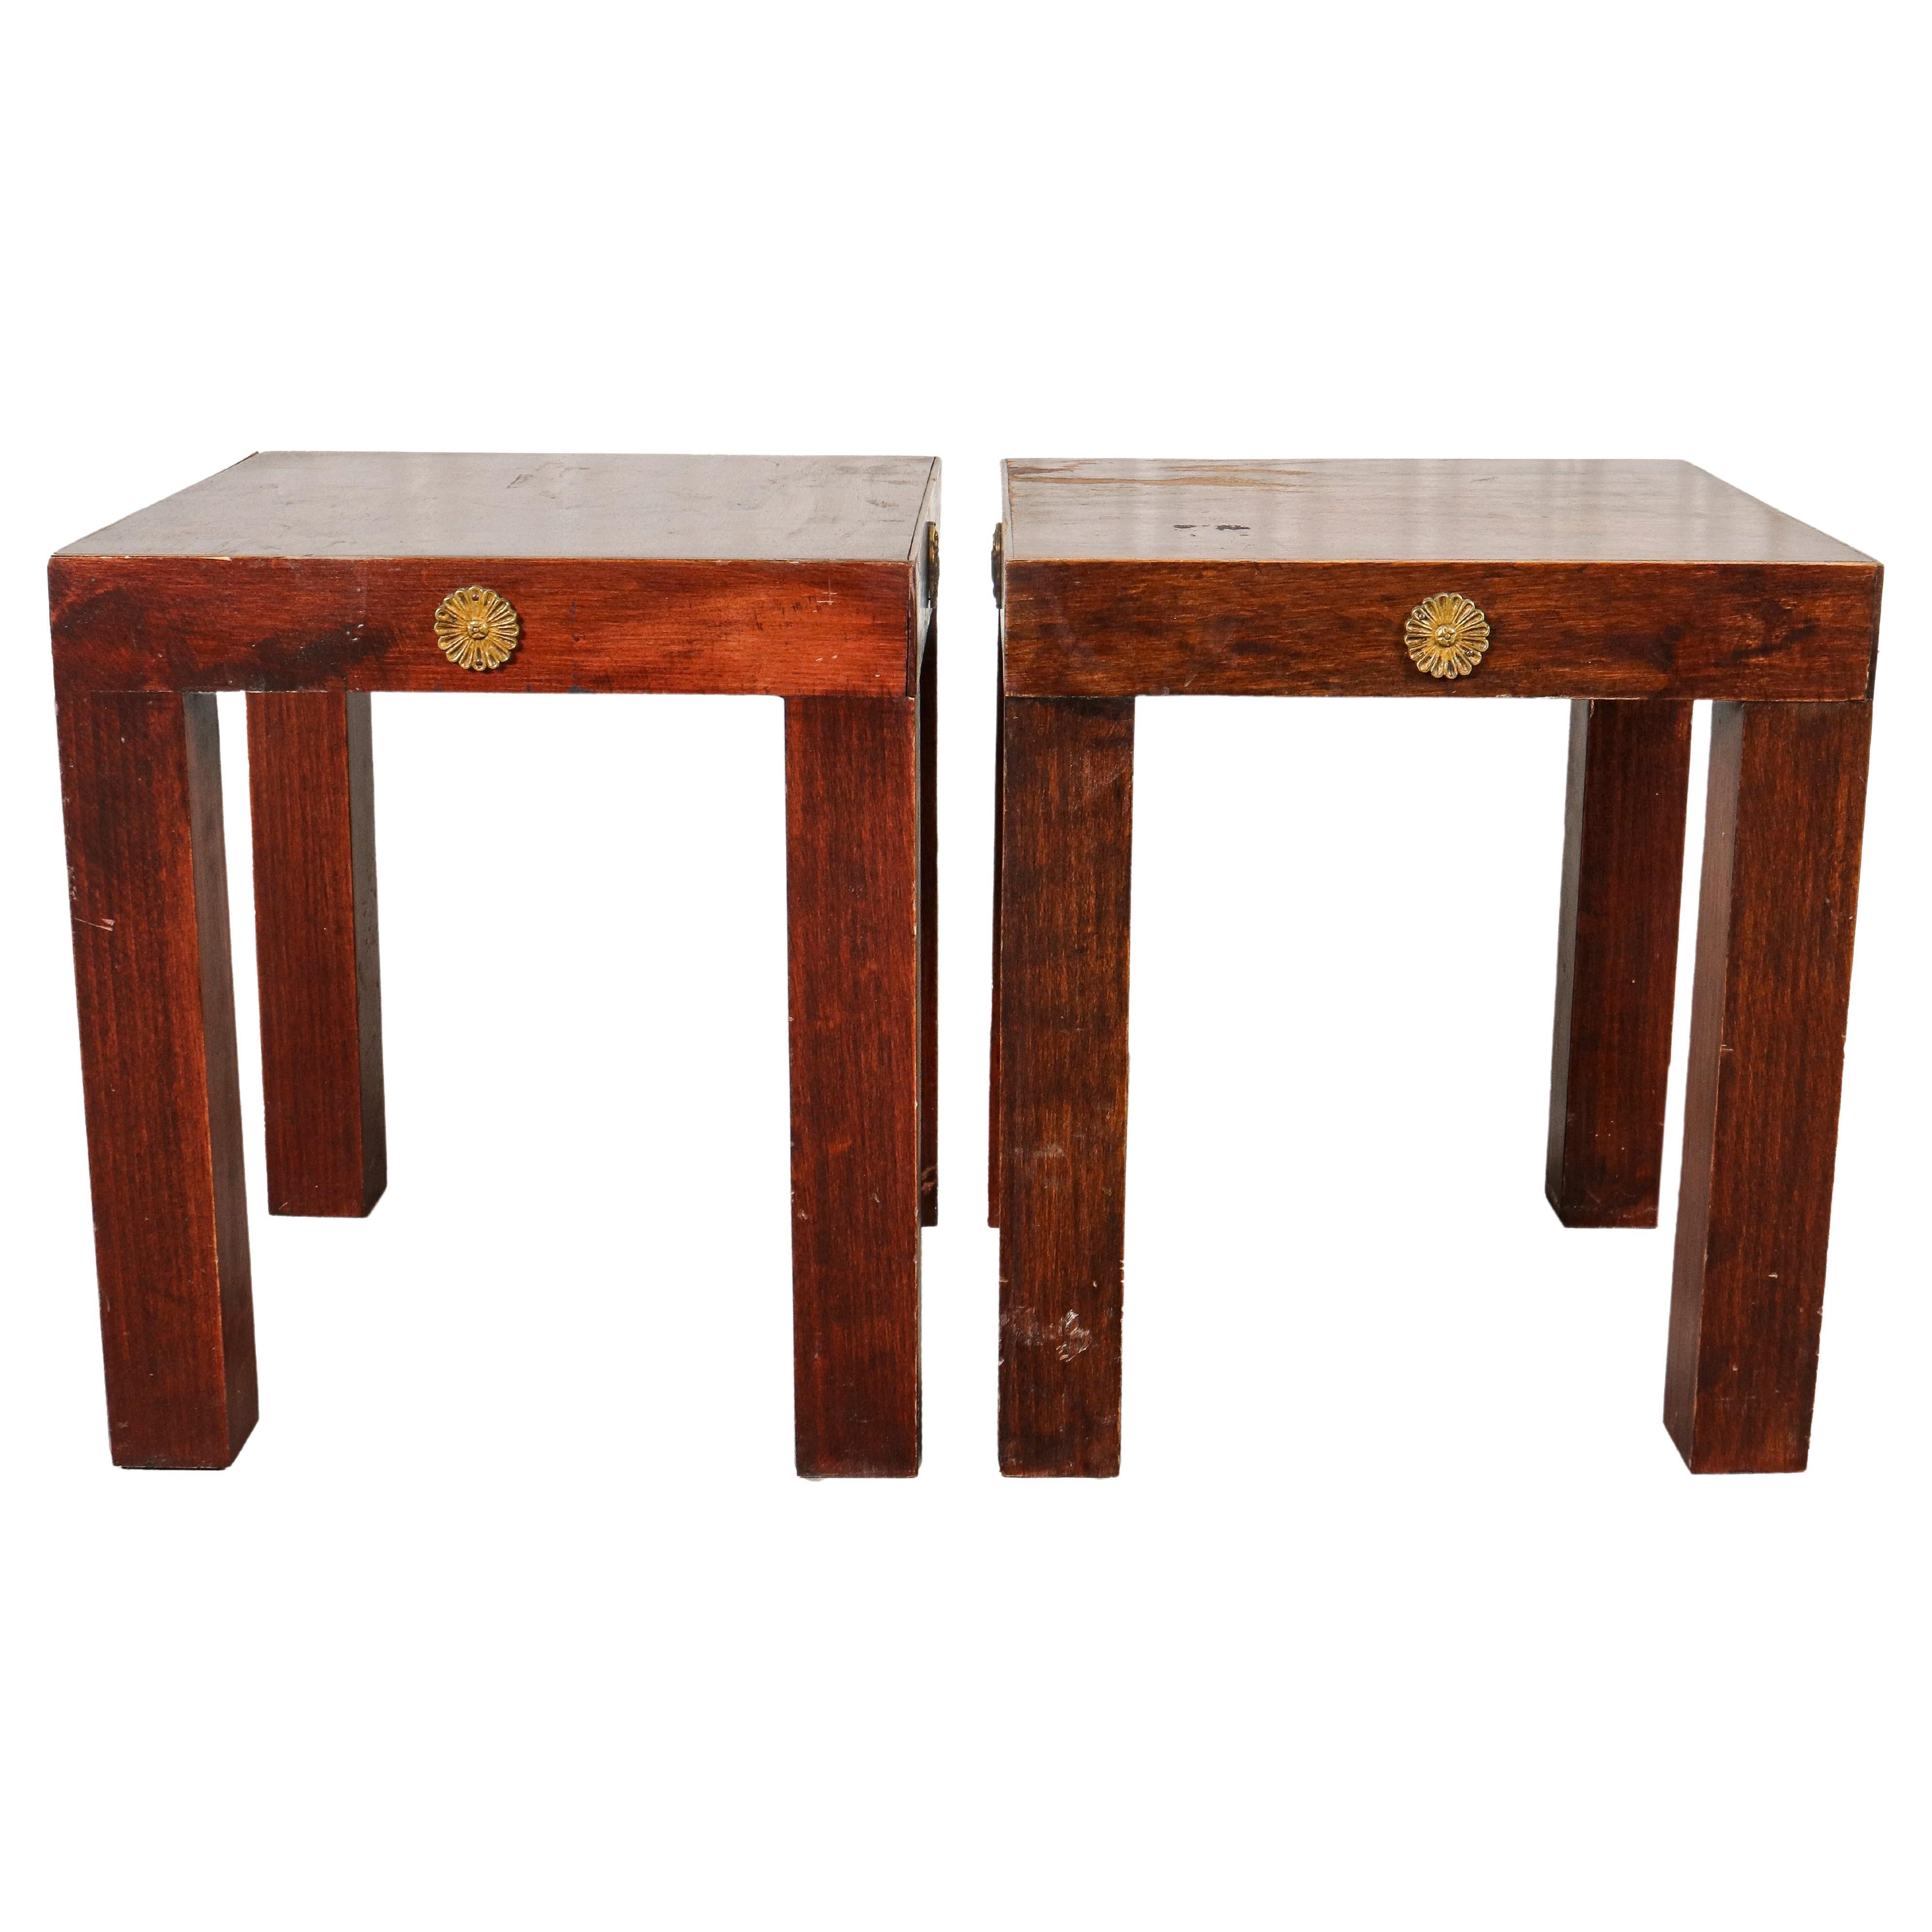 Empire Revival Diminutive Pedestal Tables, Pair For Sale